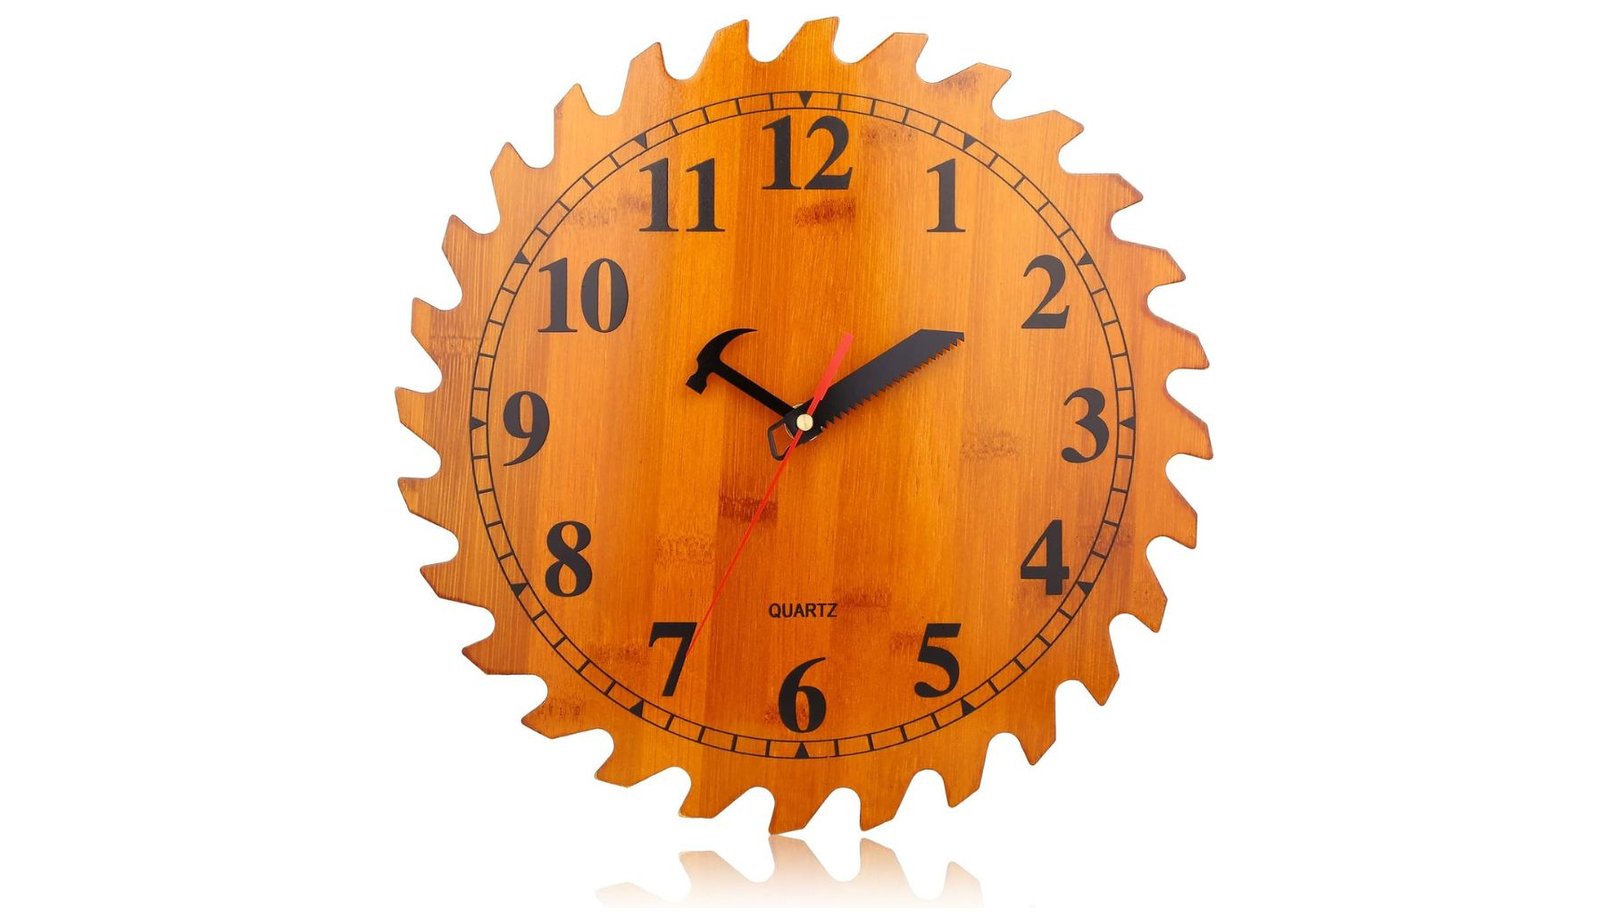 CIGERA 12 Inch Wood Garage Wall Clock Review